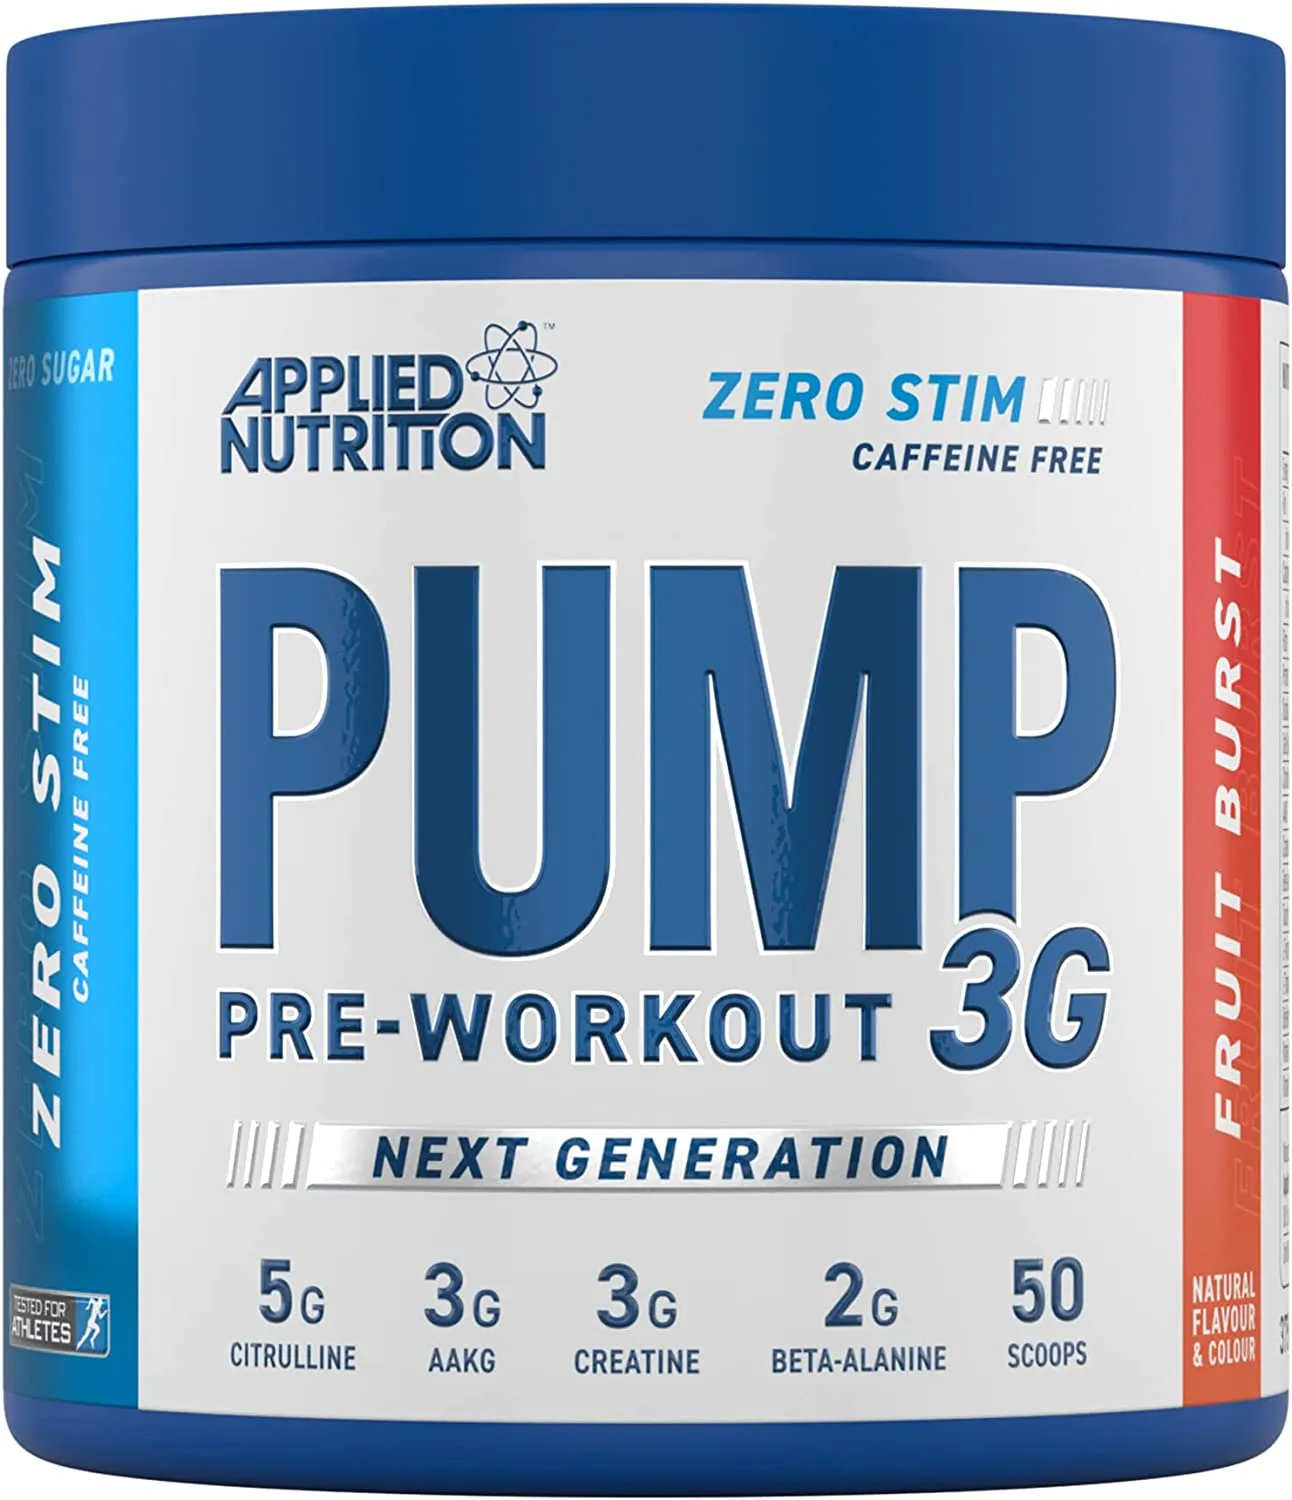 Applied Nutrition Pre wokout Pump 3G